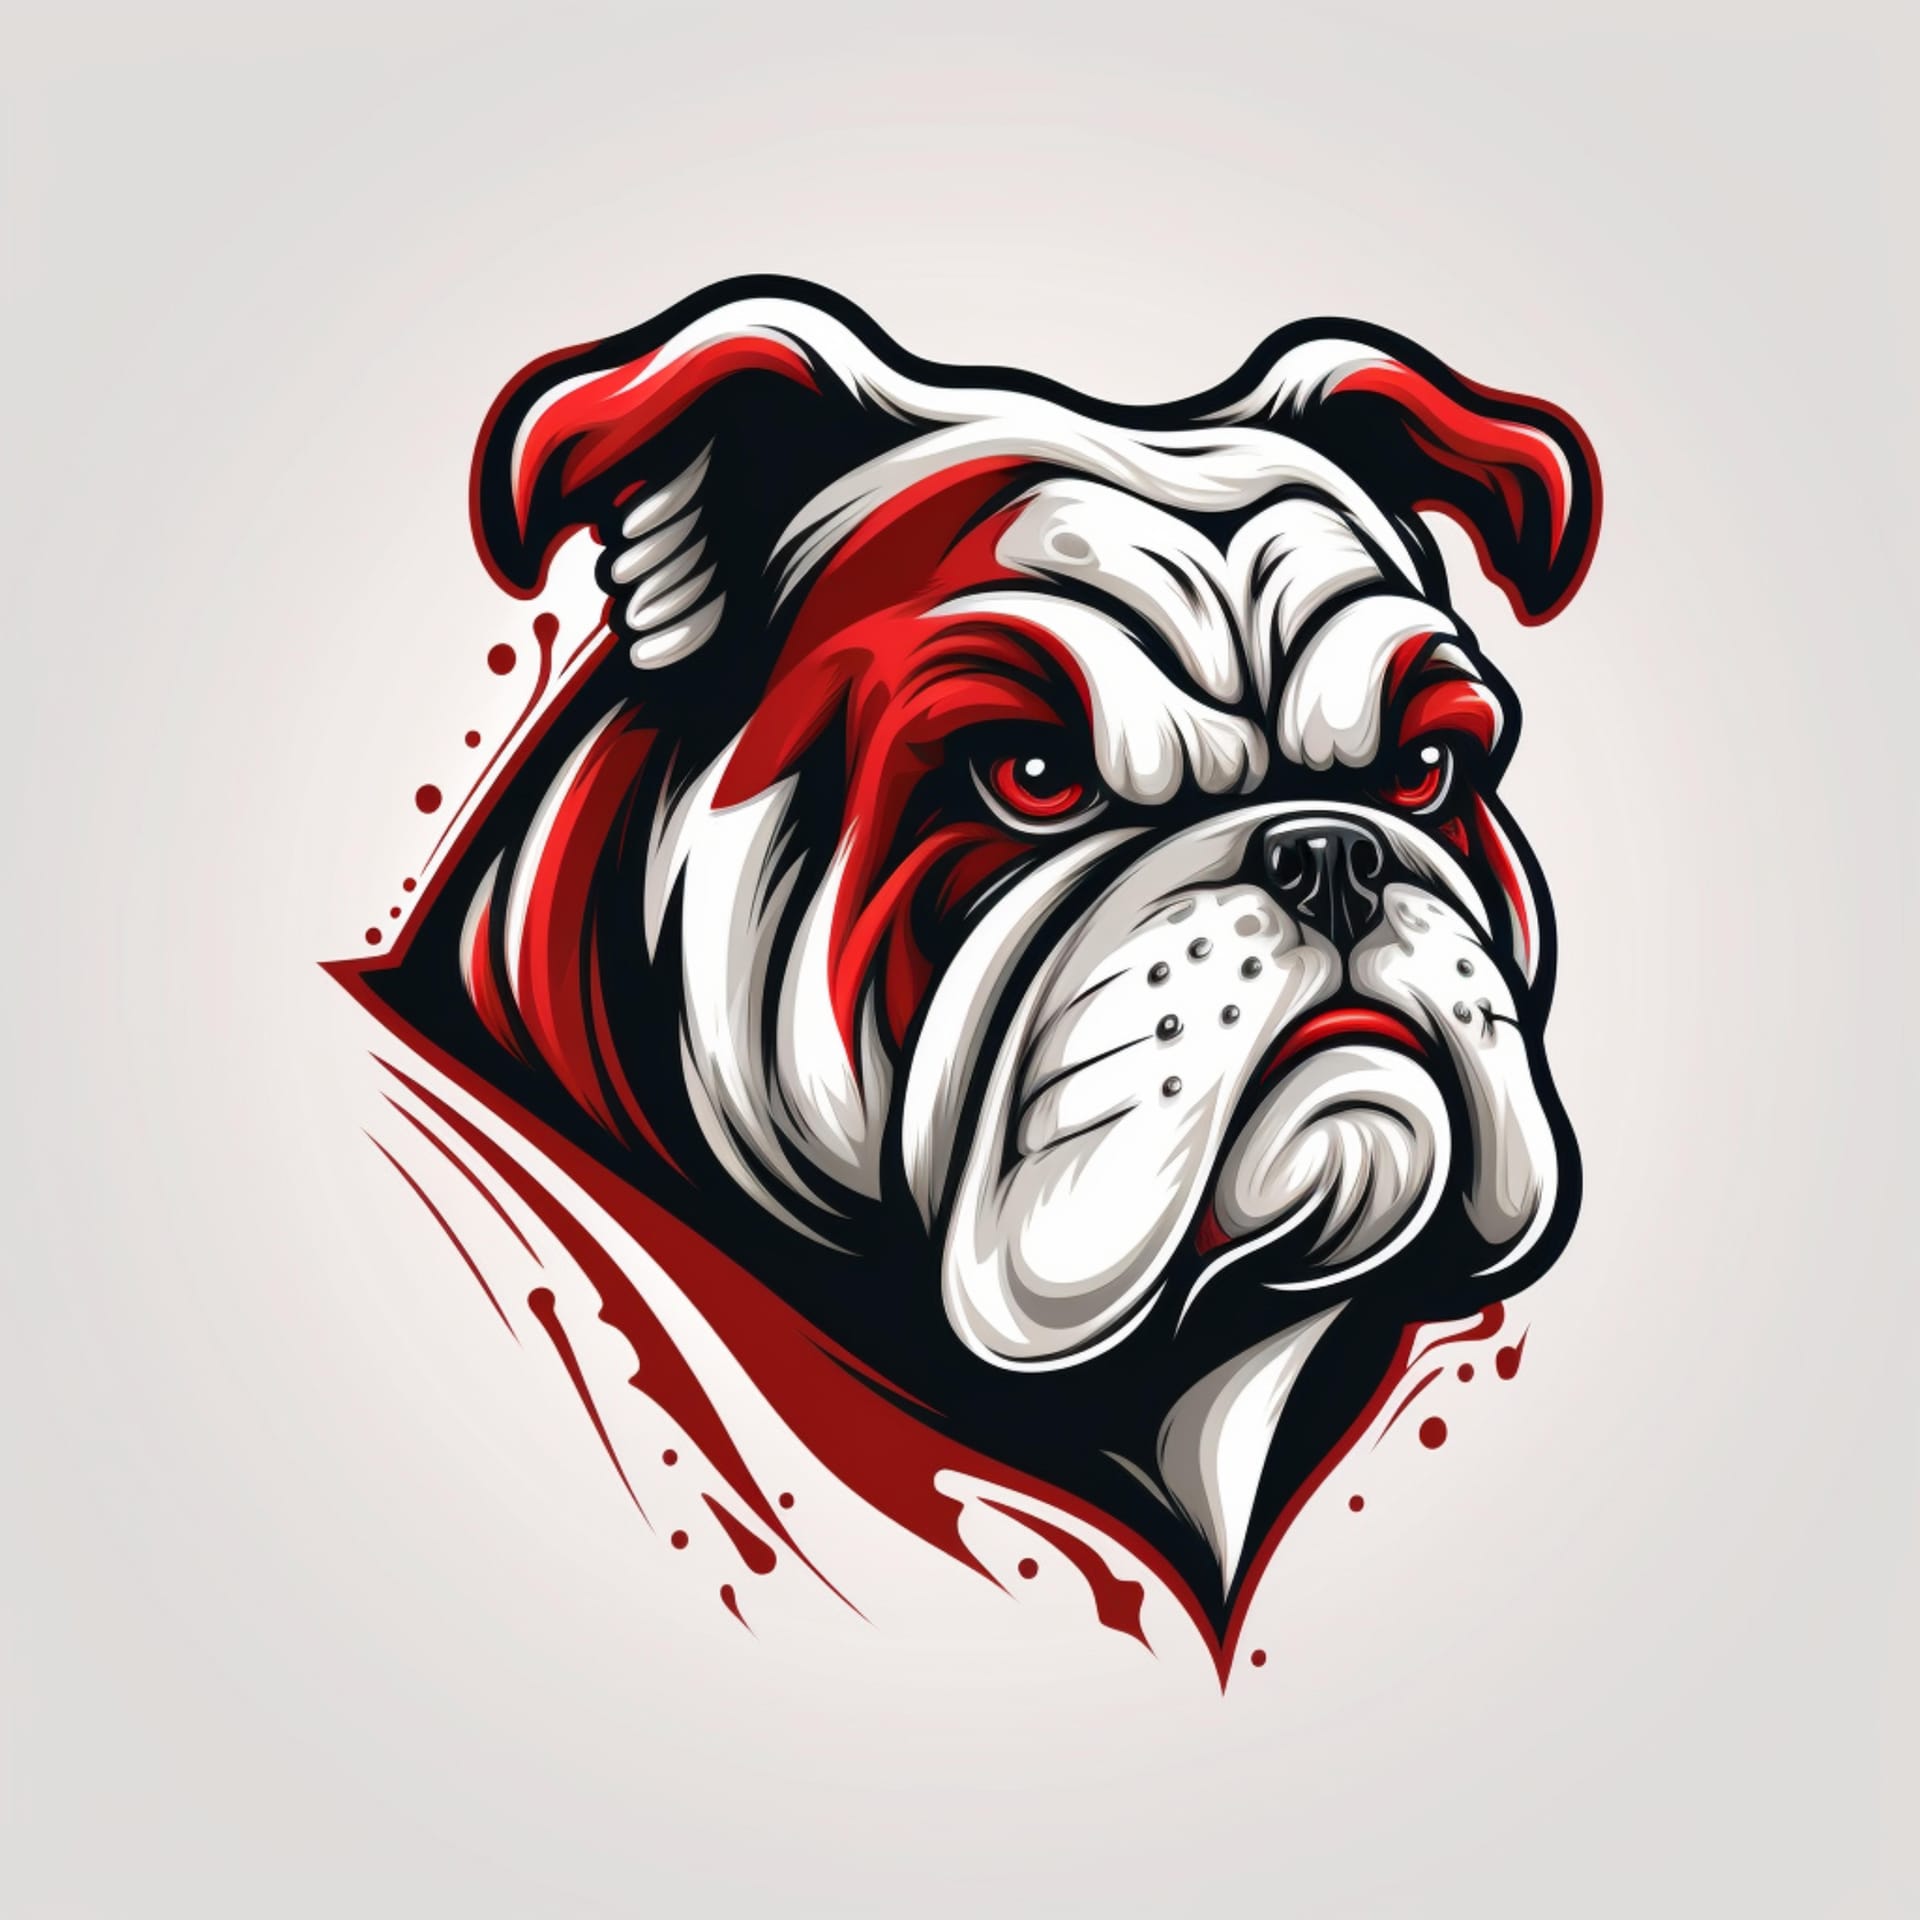 Bulldog logo illustration excellent image